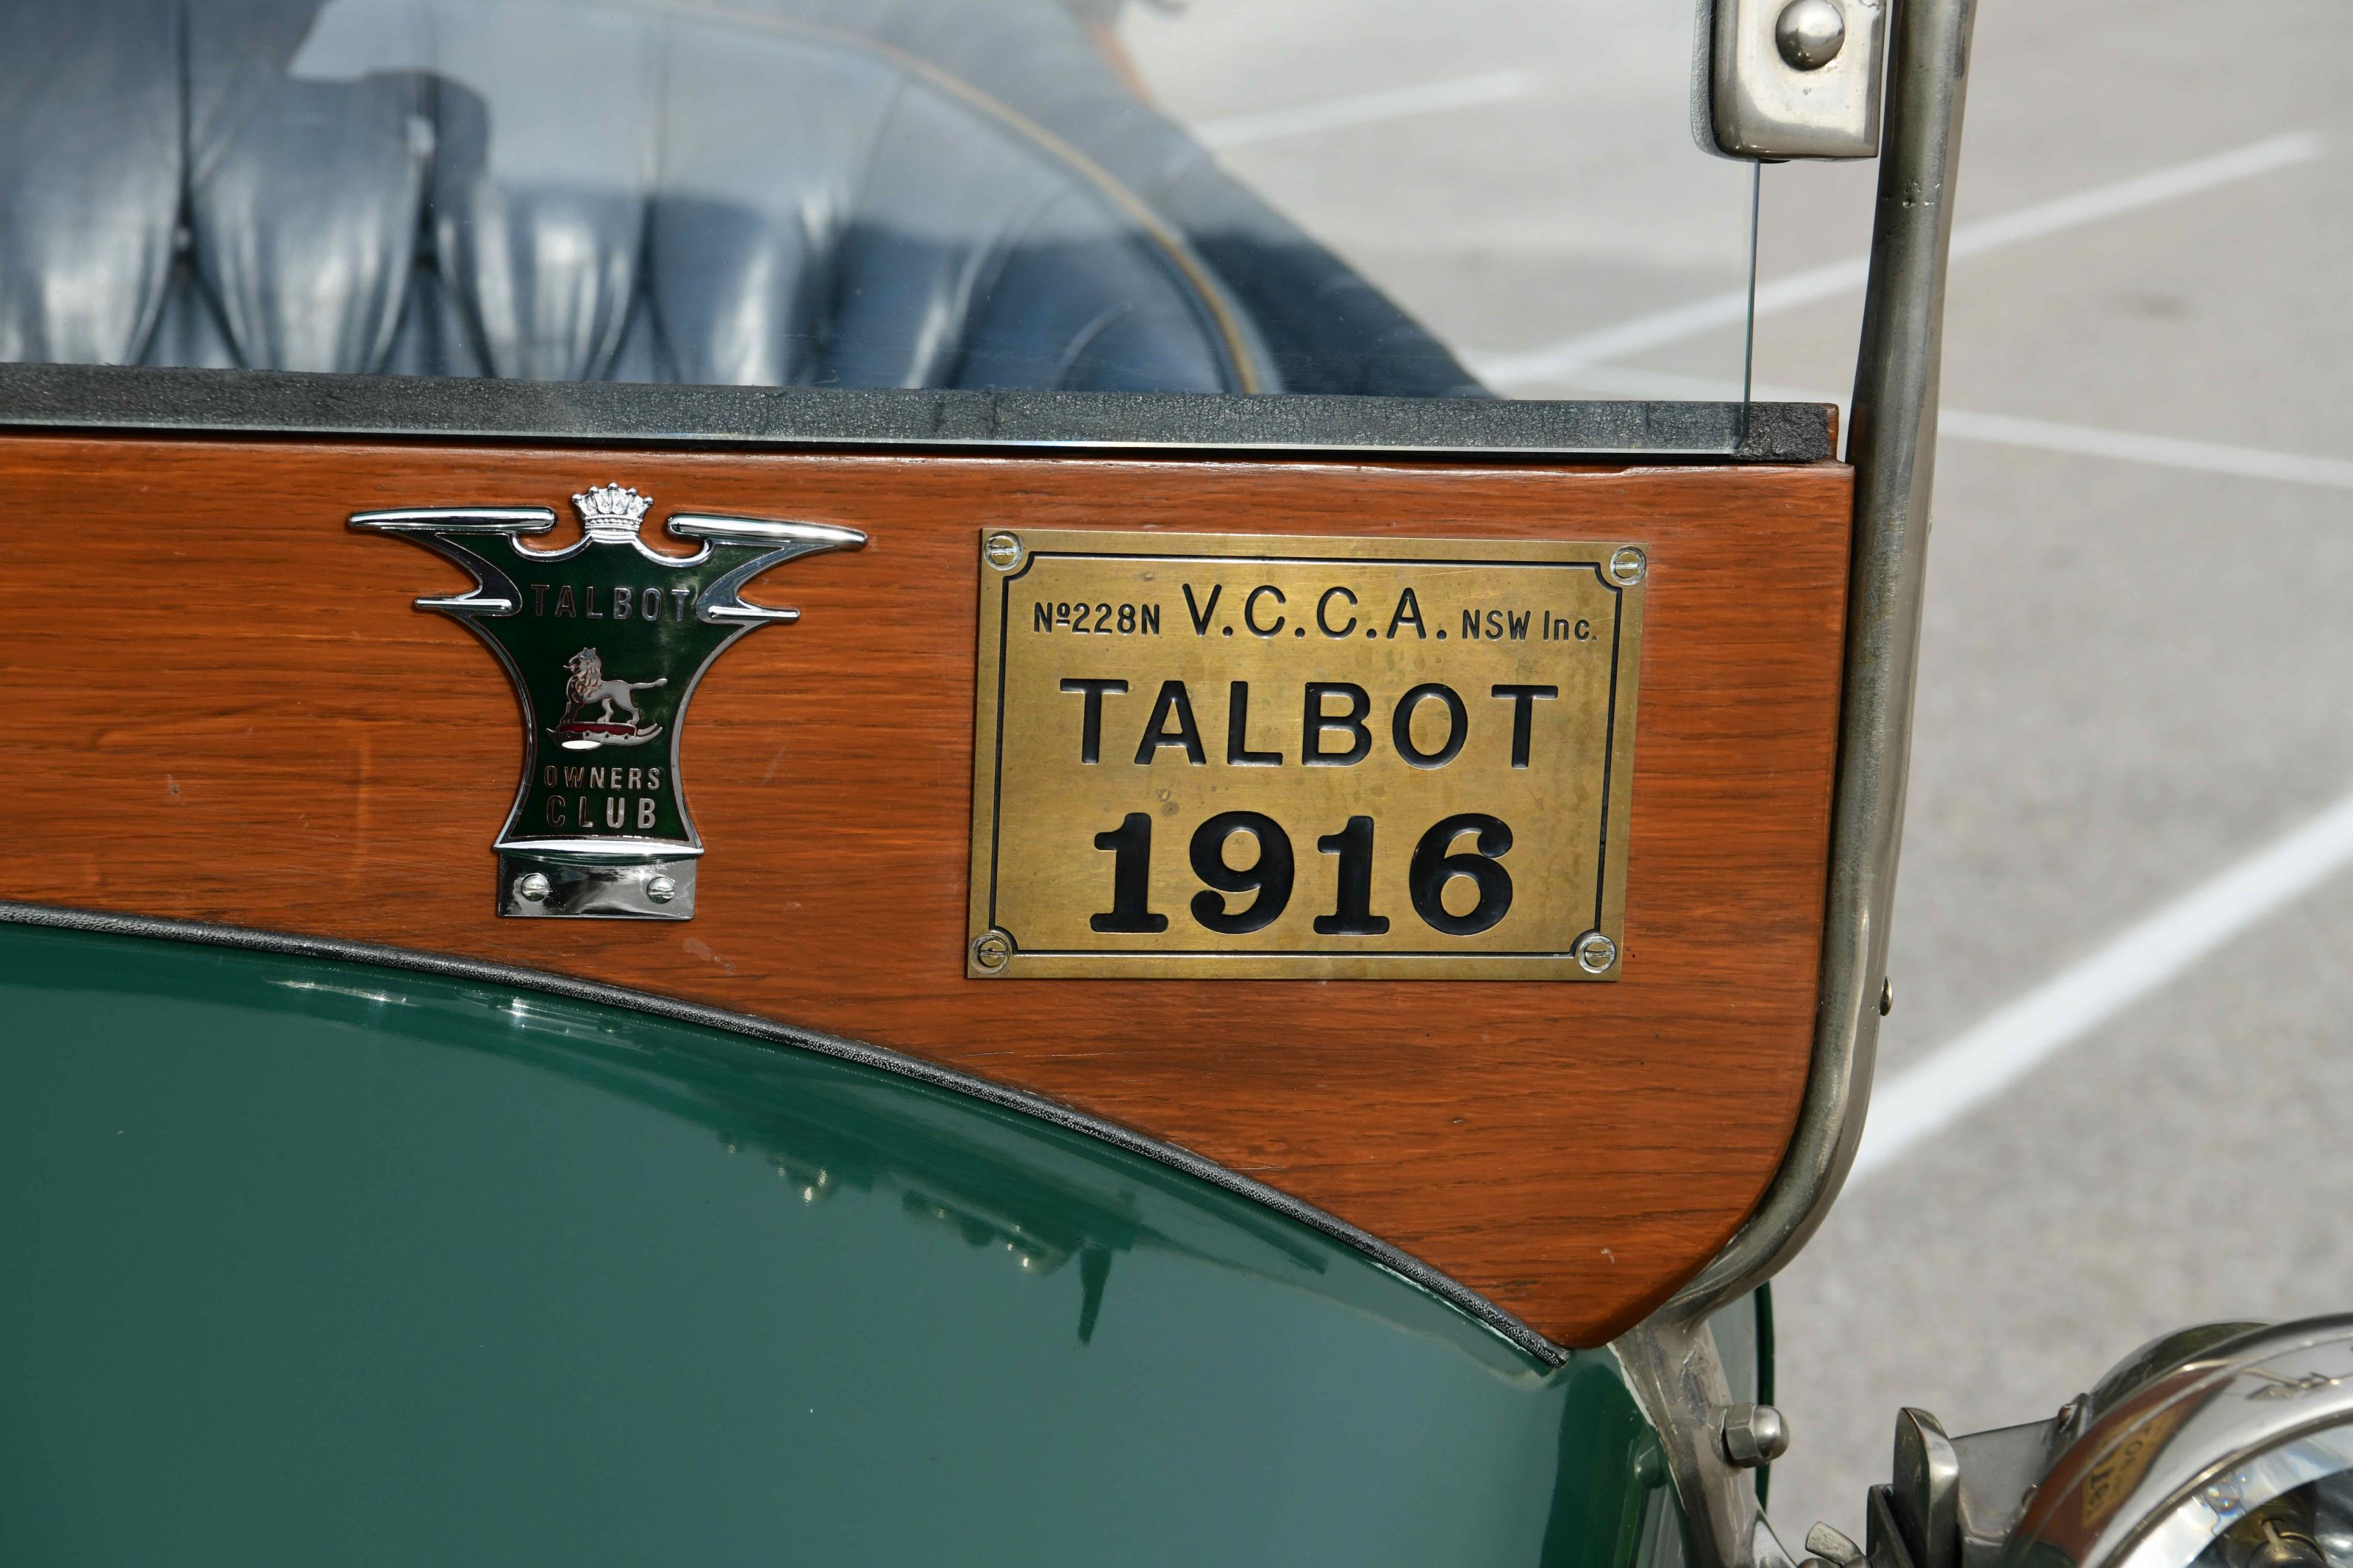 Talbot 4 cyx tourer by walter whitbourne of melbourne x4og1pkari7b0o32worc 